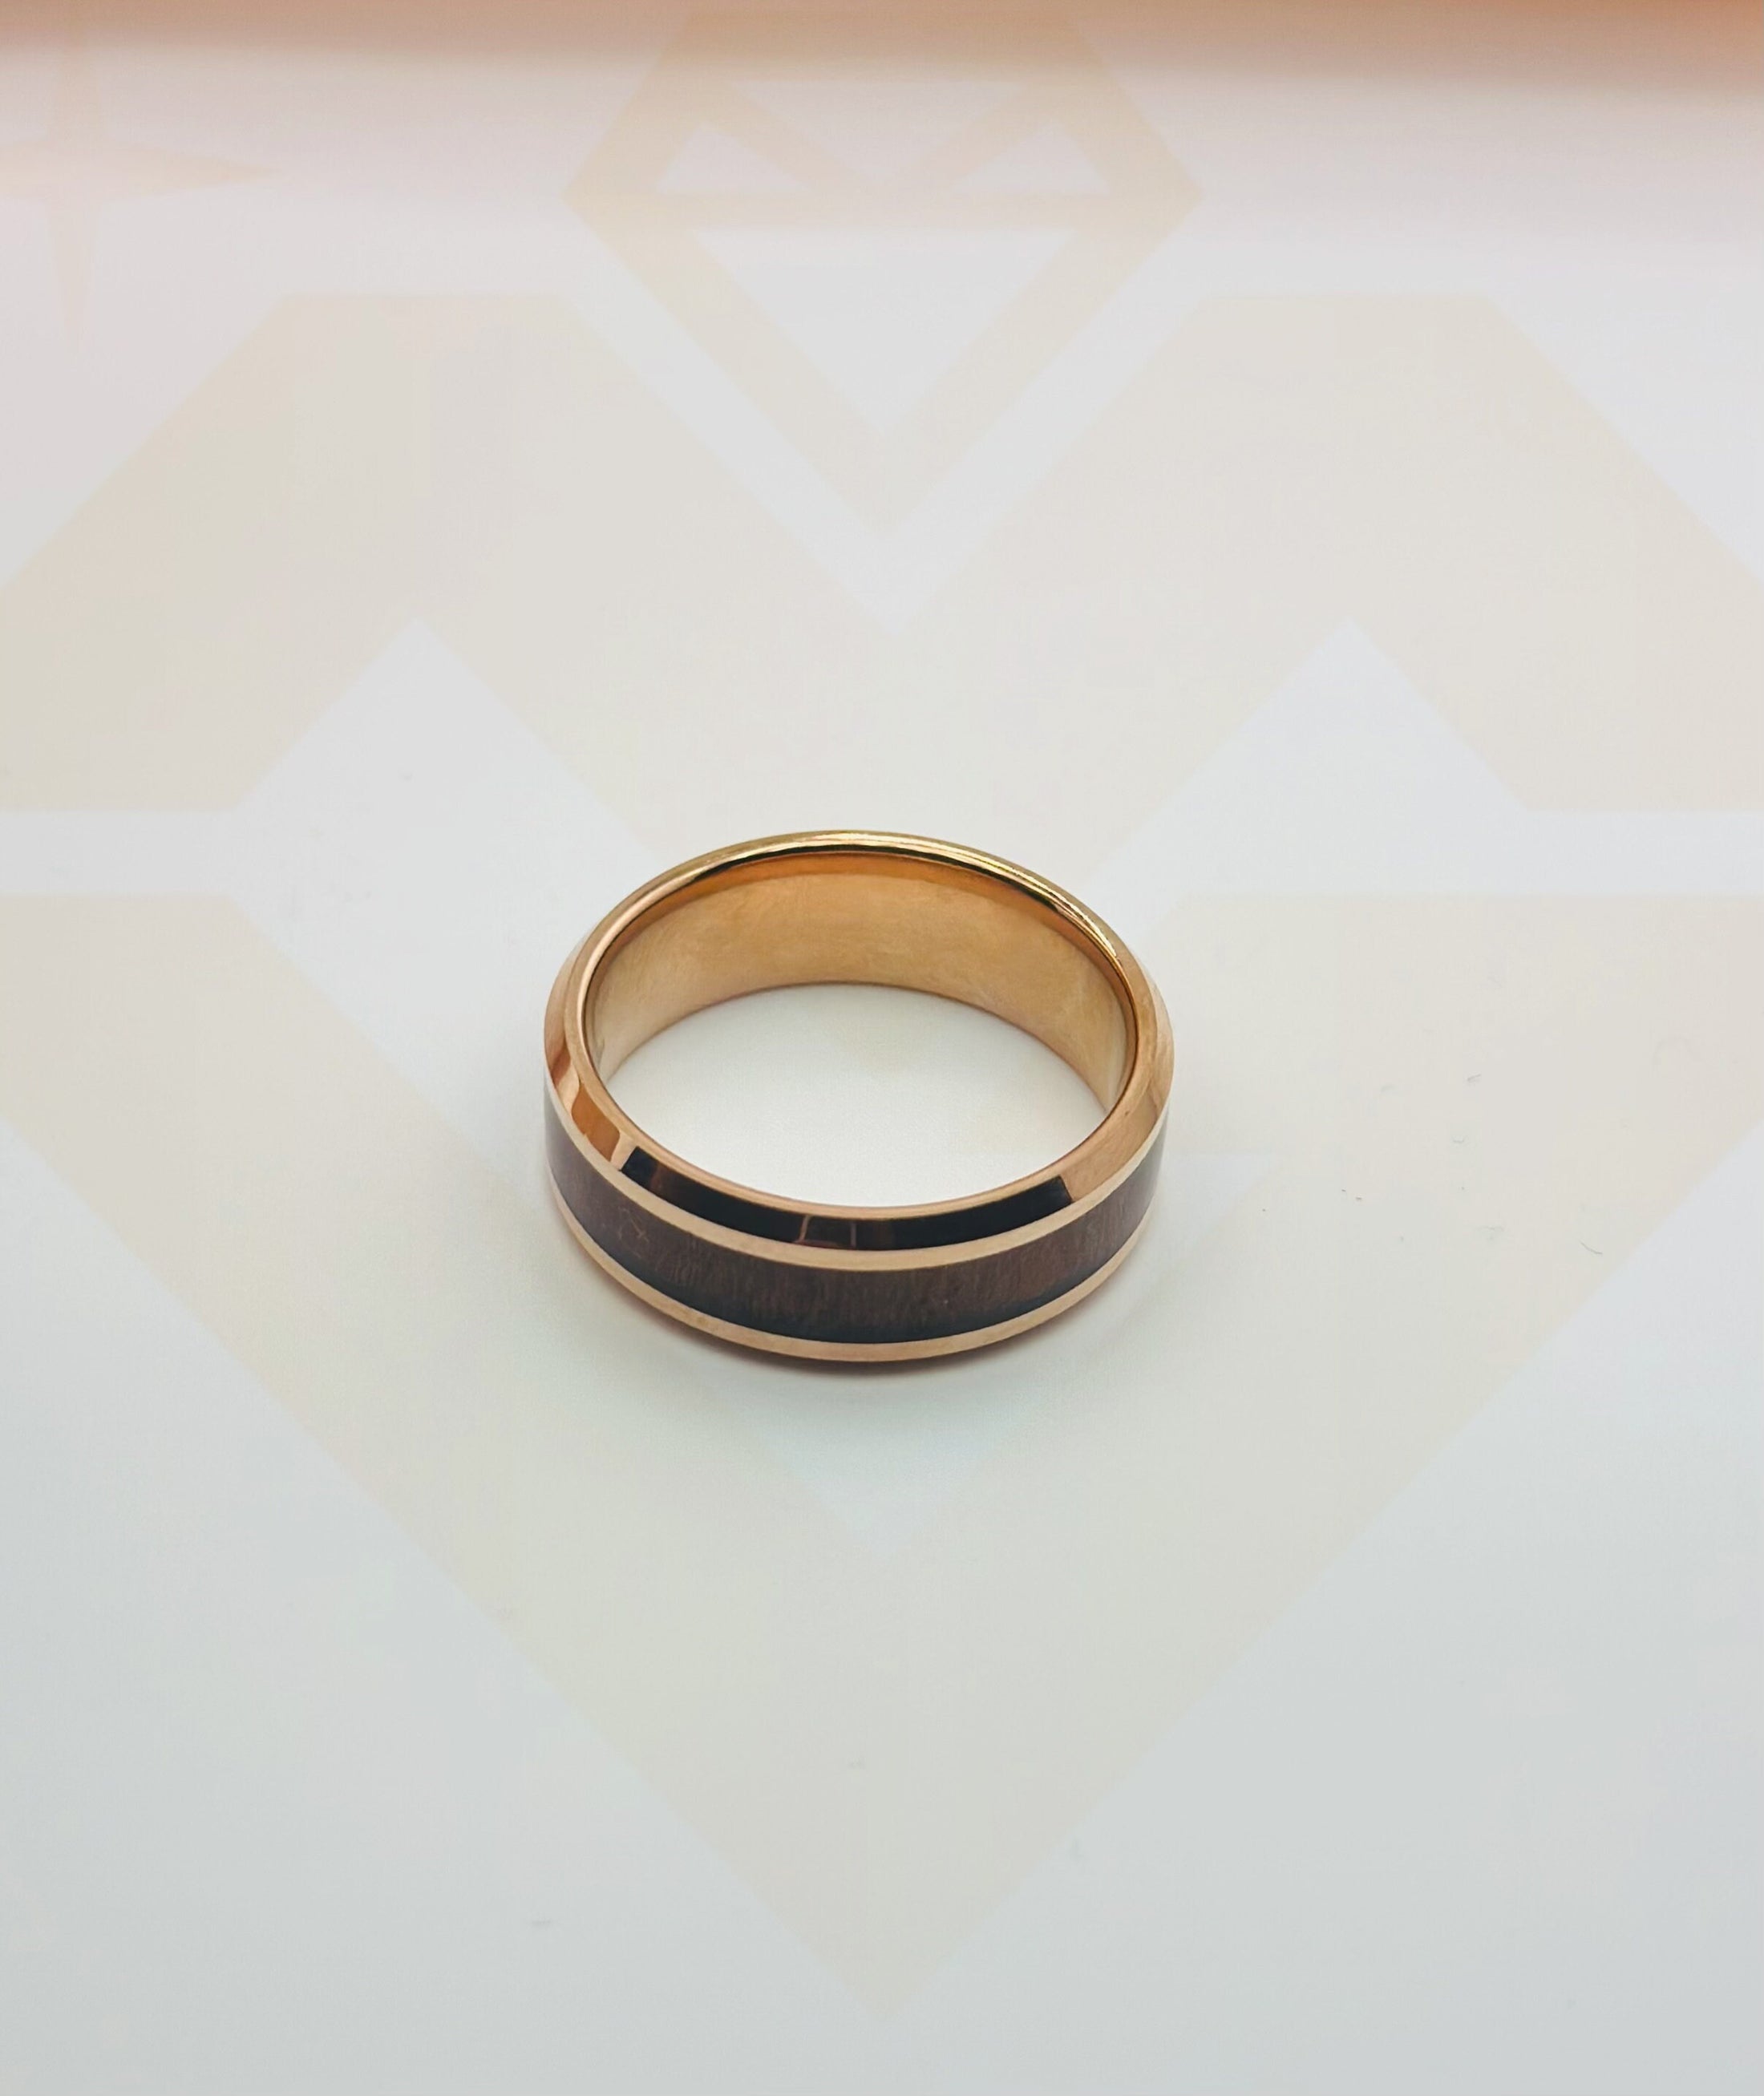 Stunning 14k Gold Vermeil Men's Wedding Band, Unique Tungsten Design - Eye of the Tiger, Wedding Band, Engagement Ring Men promise ring Sale